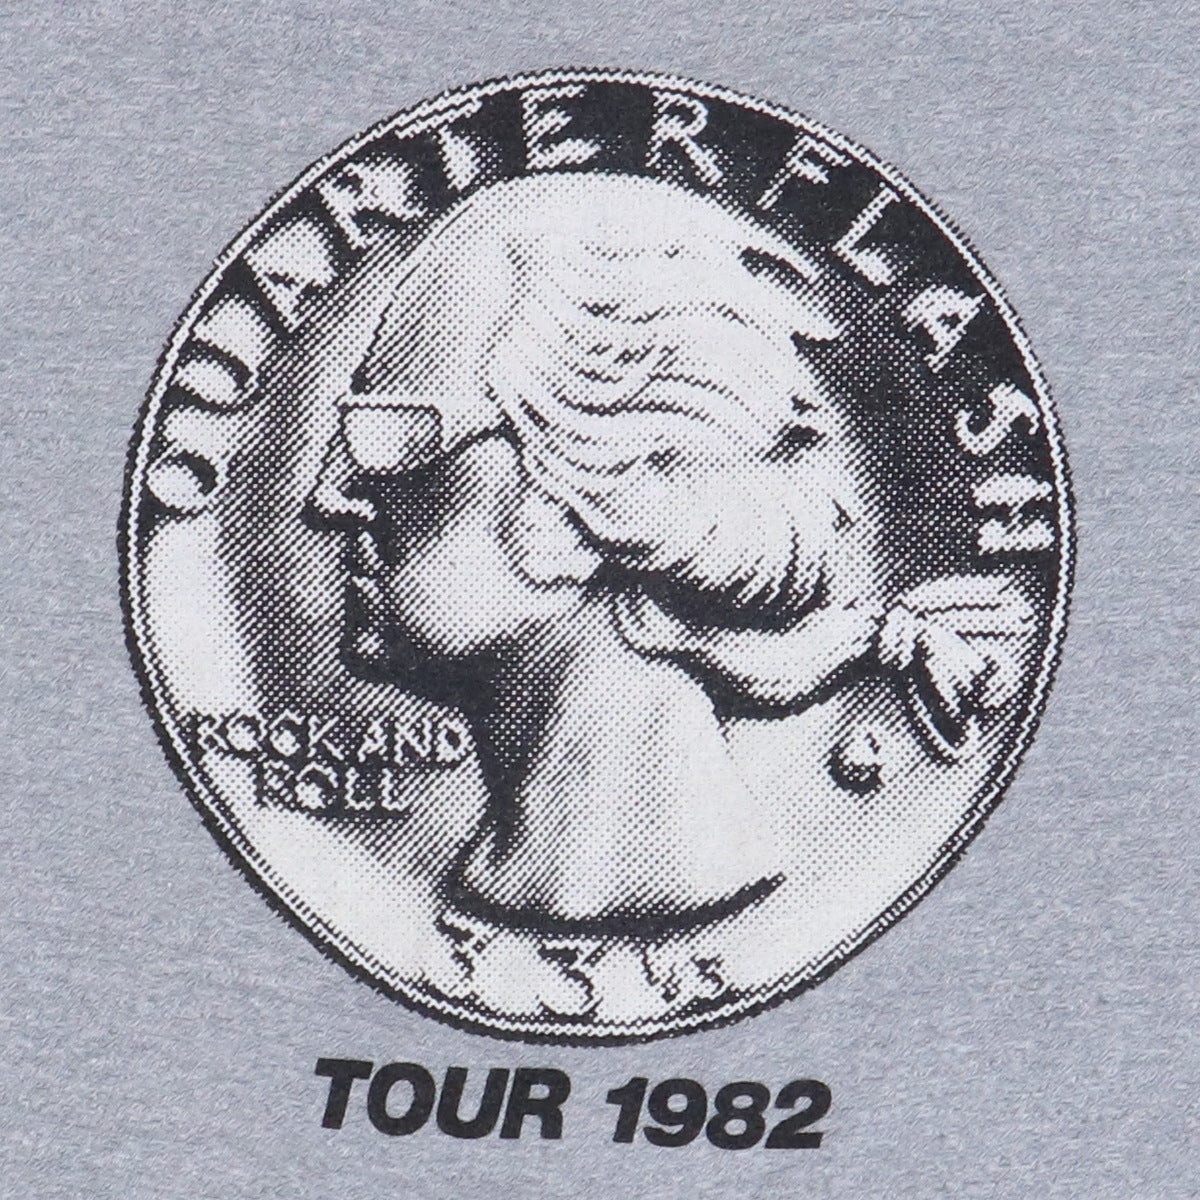 1982 Quarterflash Tour Shirt